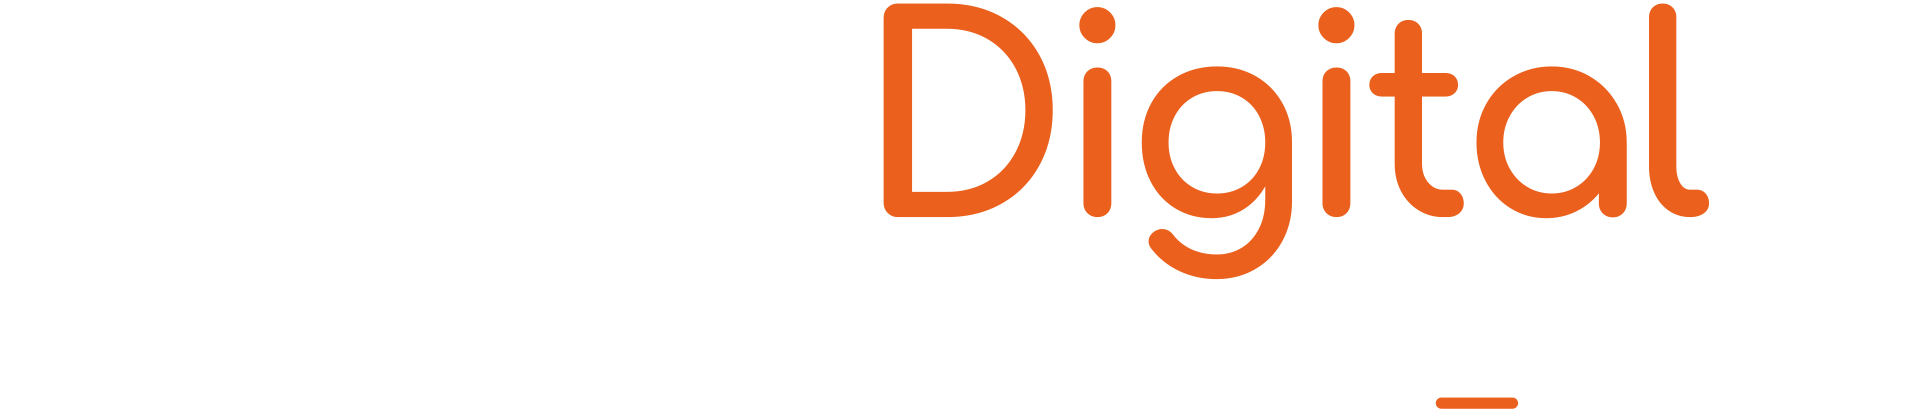 Teatro Digital